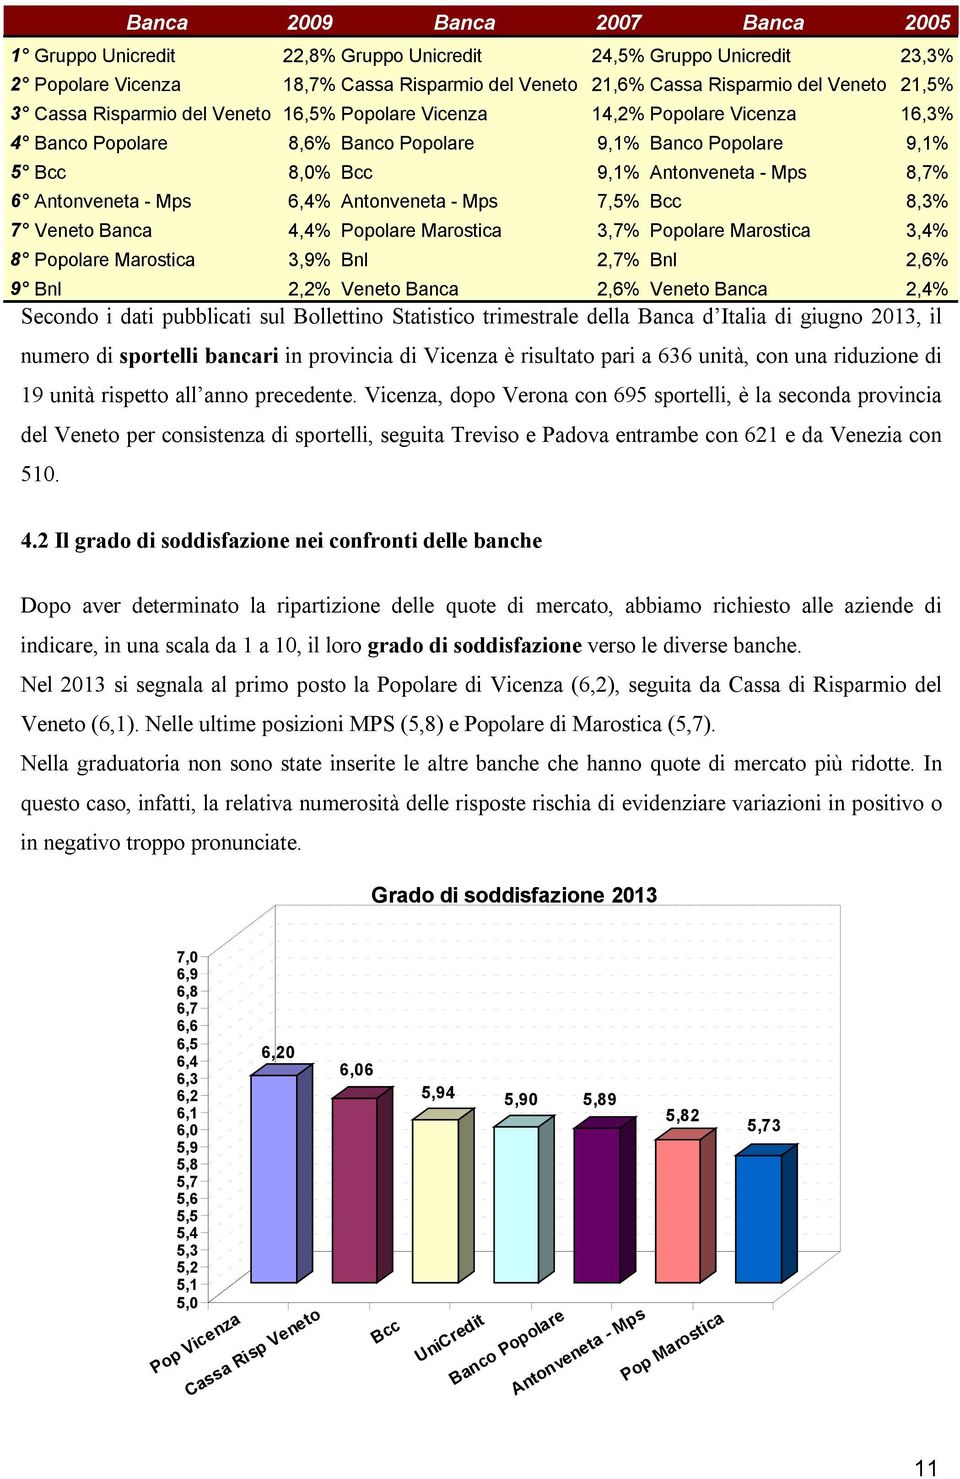 Mps 6,4% Antonveneta - Mps 7,5% Bcc 8,3% 7 Veneto Banca 4,4% Popolare Marostica 3,7% Popolare Marostica 3,4% 8 Popolare Marostica 3,9% Bnl 2,7% Bnl 2,6% 9 Bnl 2,2% Veneto Banca 2,6% Veneto Banca 2,4%